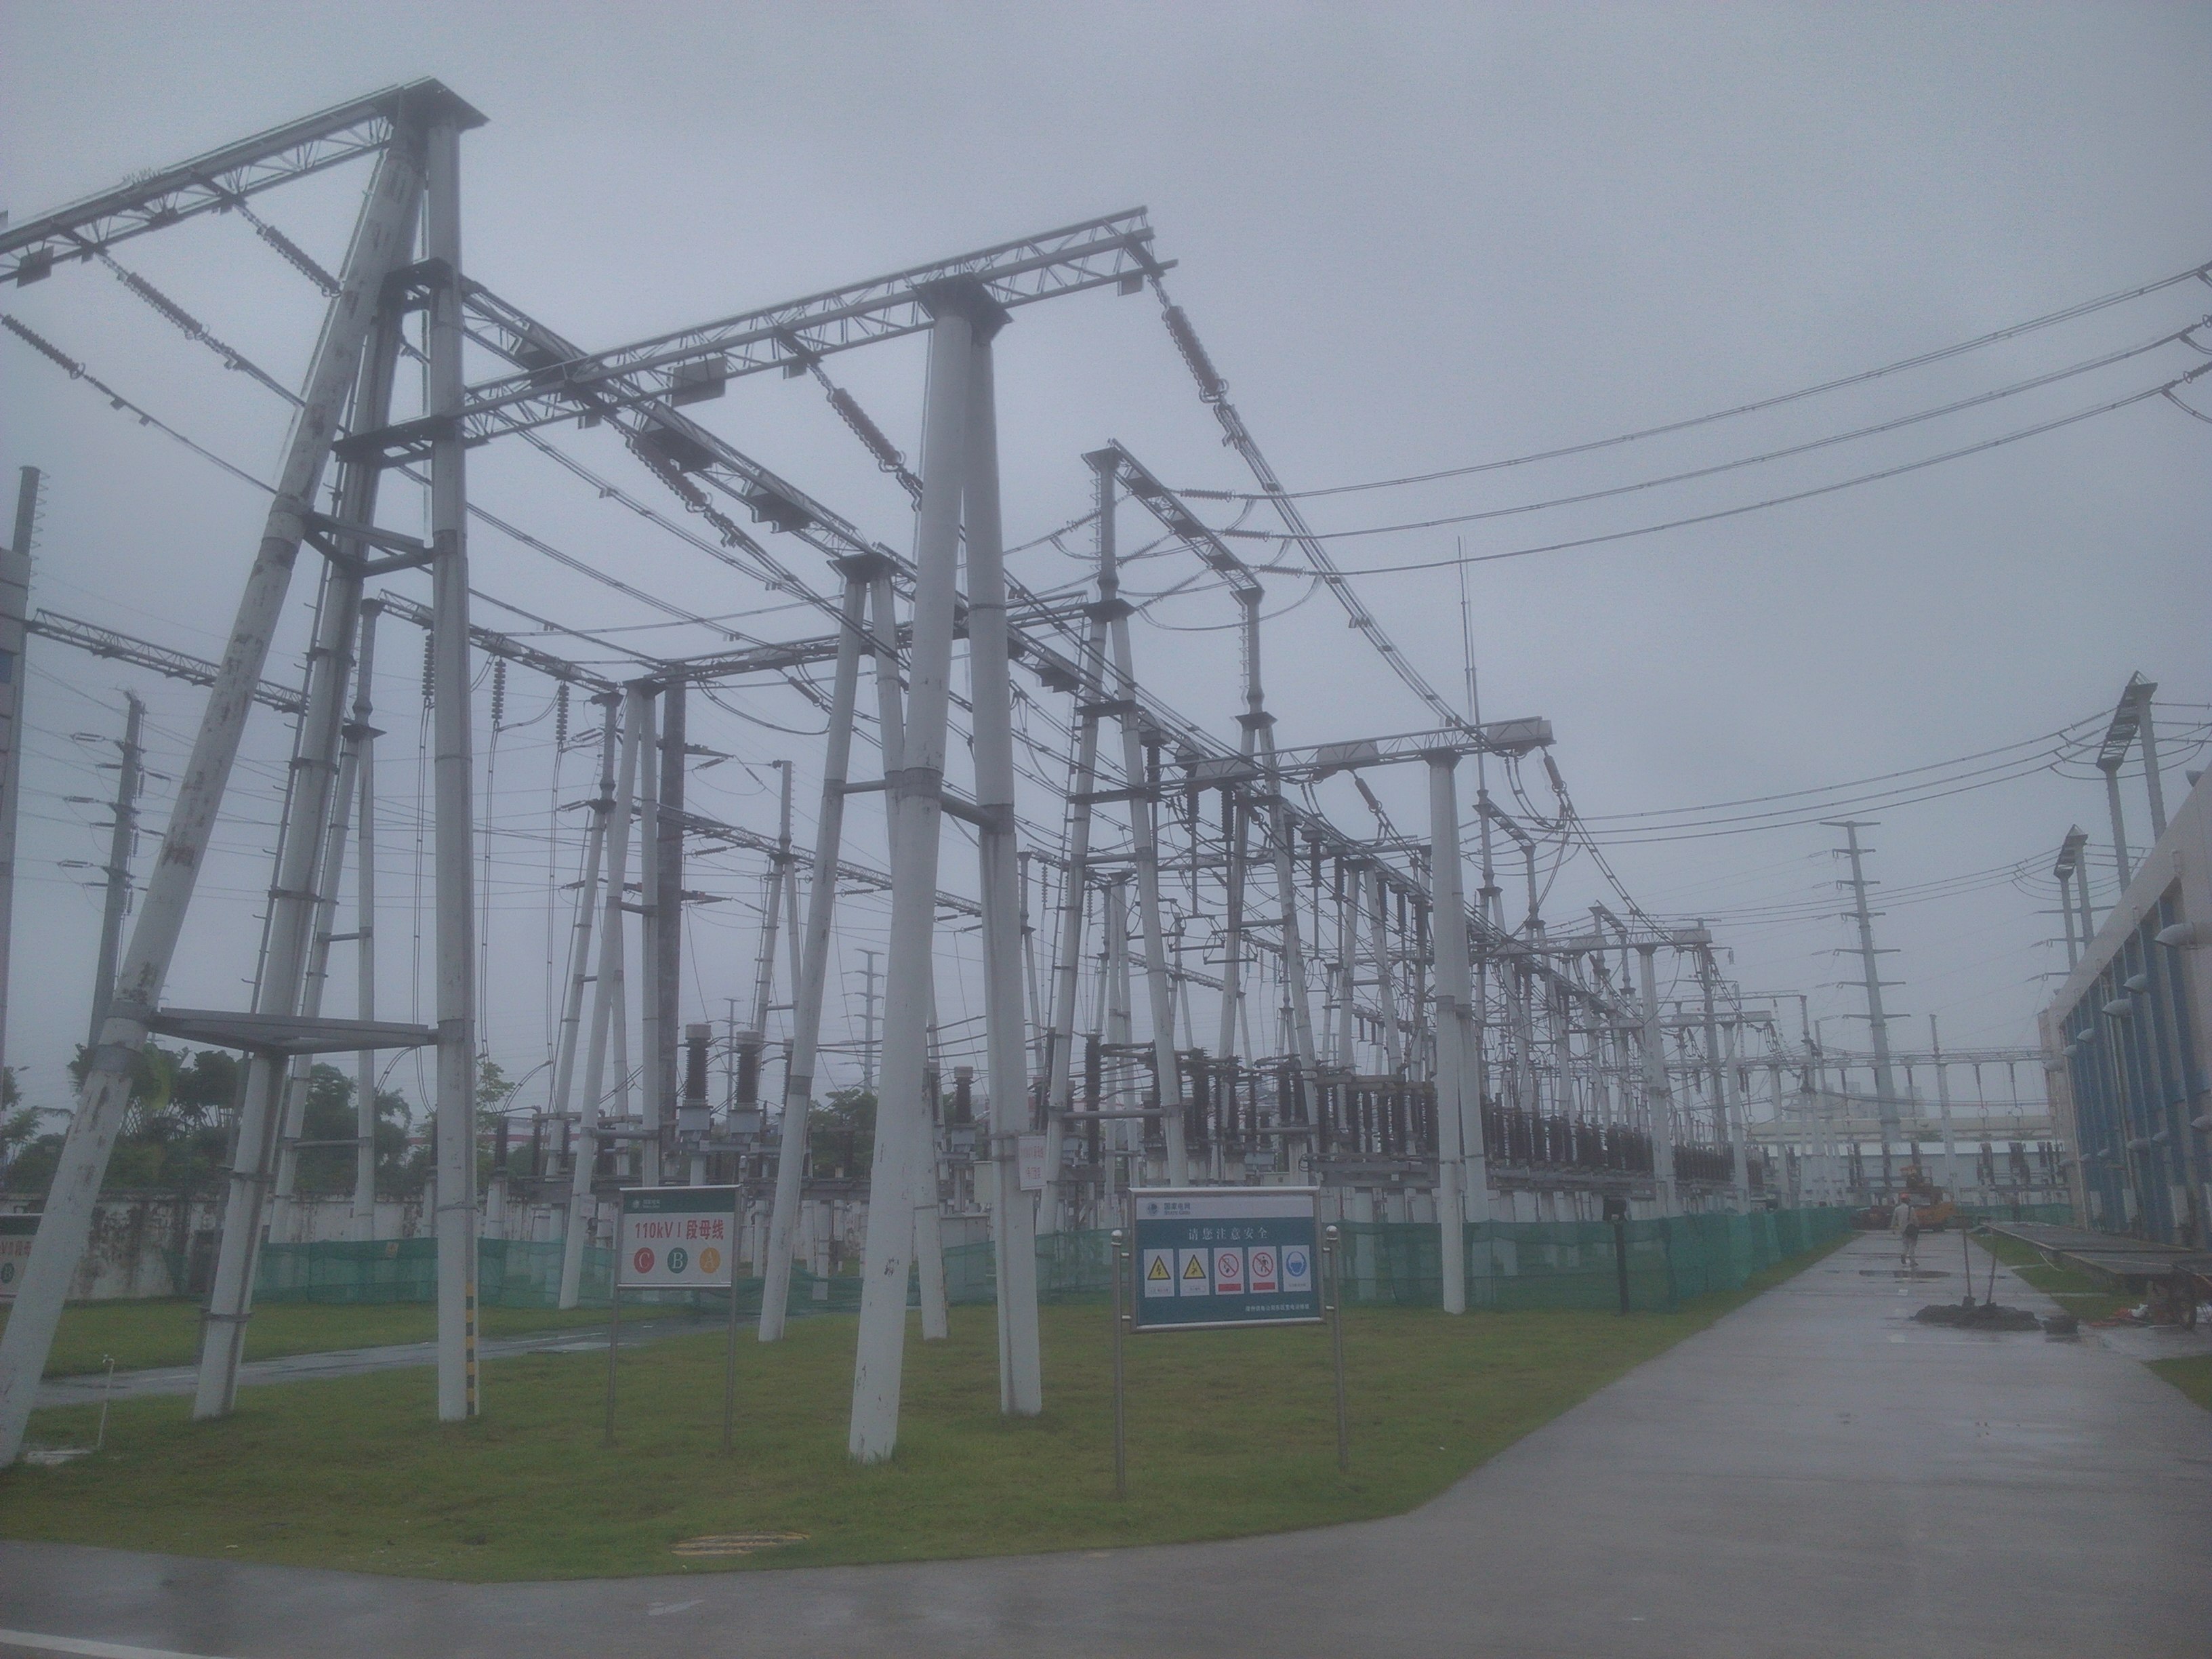 Suichuan 220 kV Substation, Jiangxi Province, China